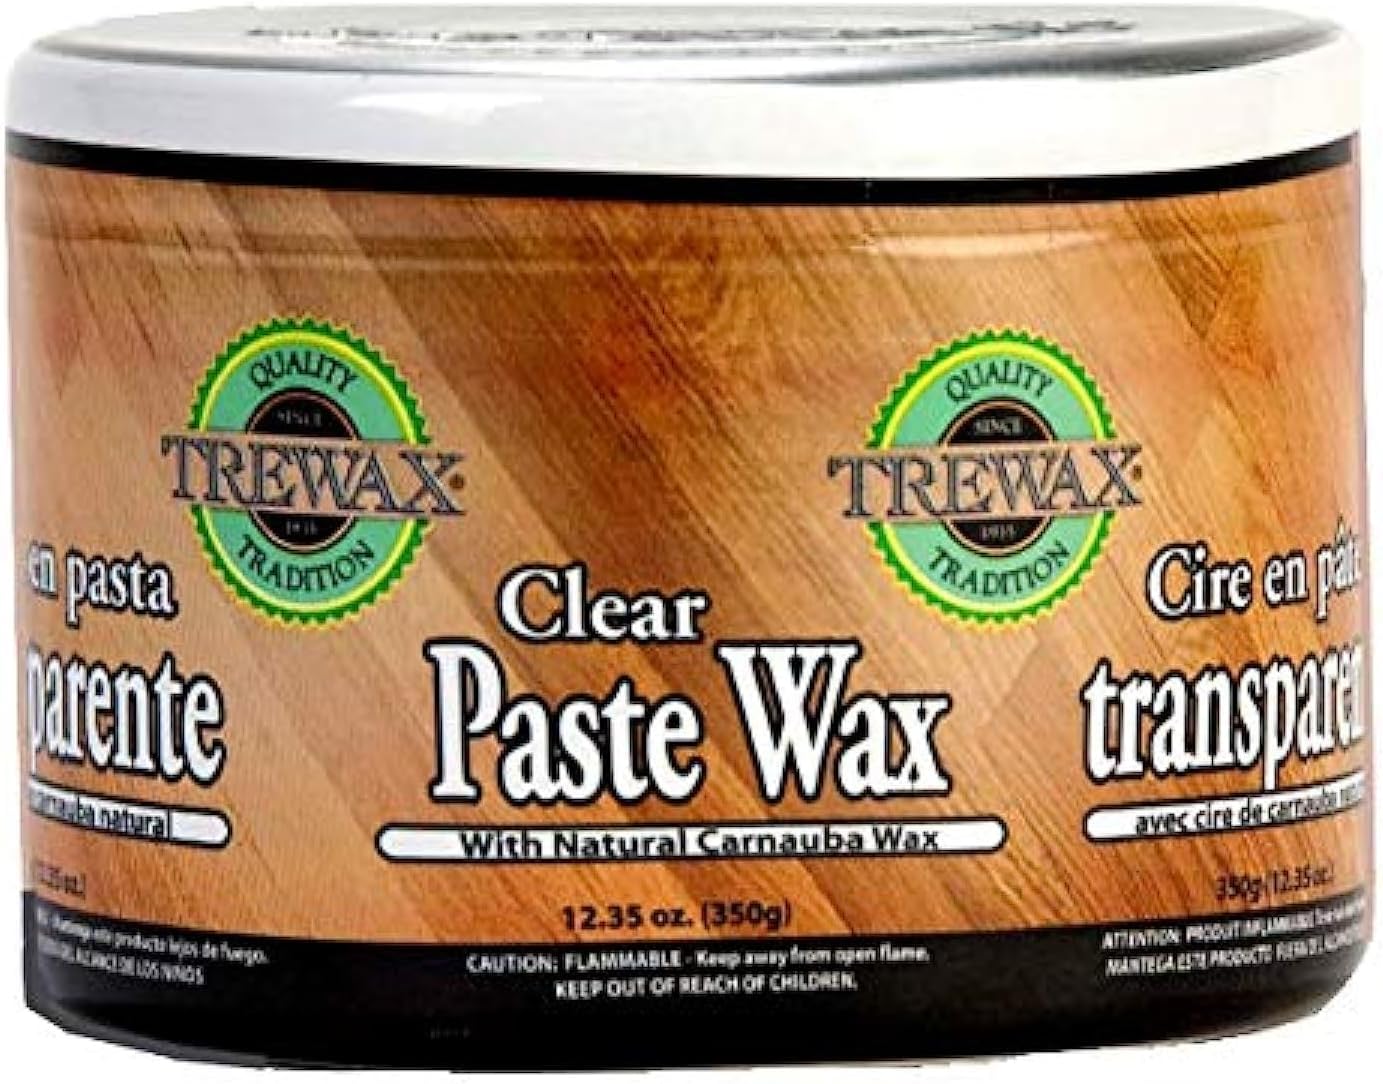 Trewax Paste Wax with Carnauba Wax